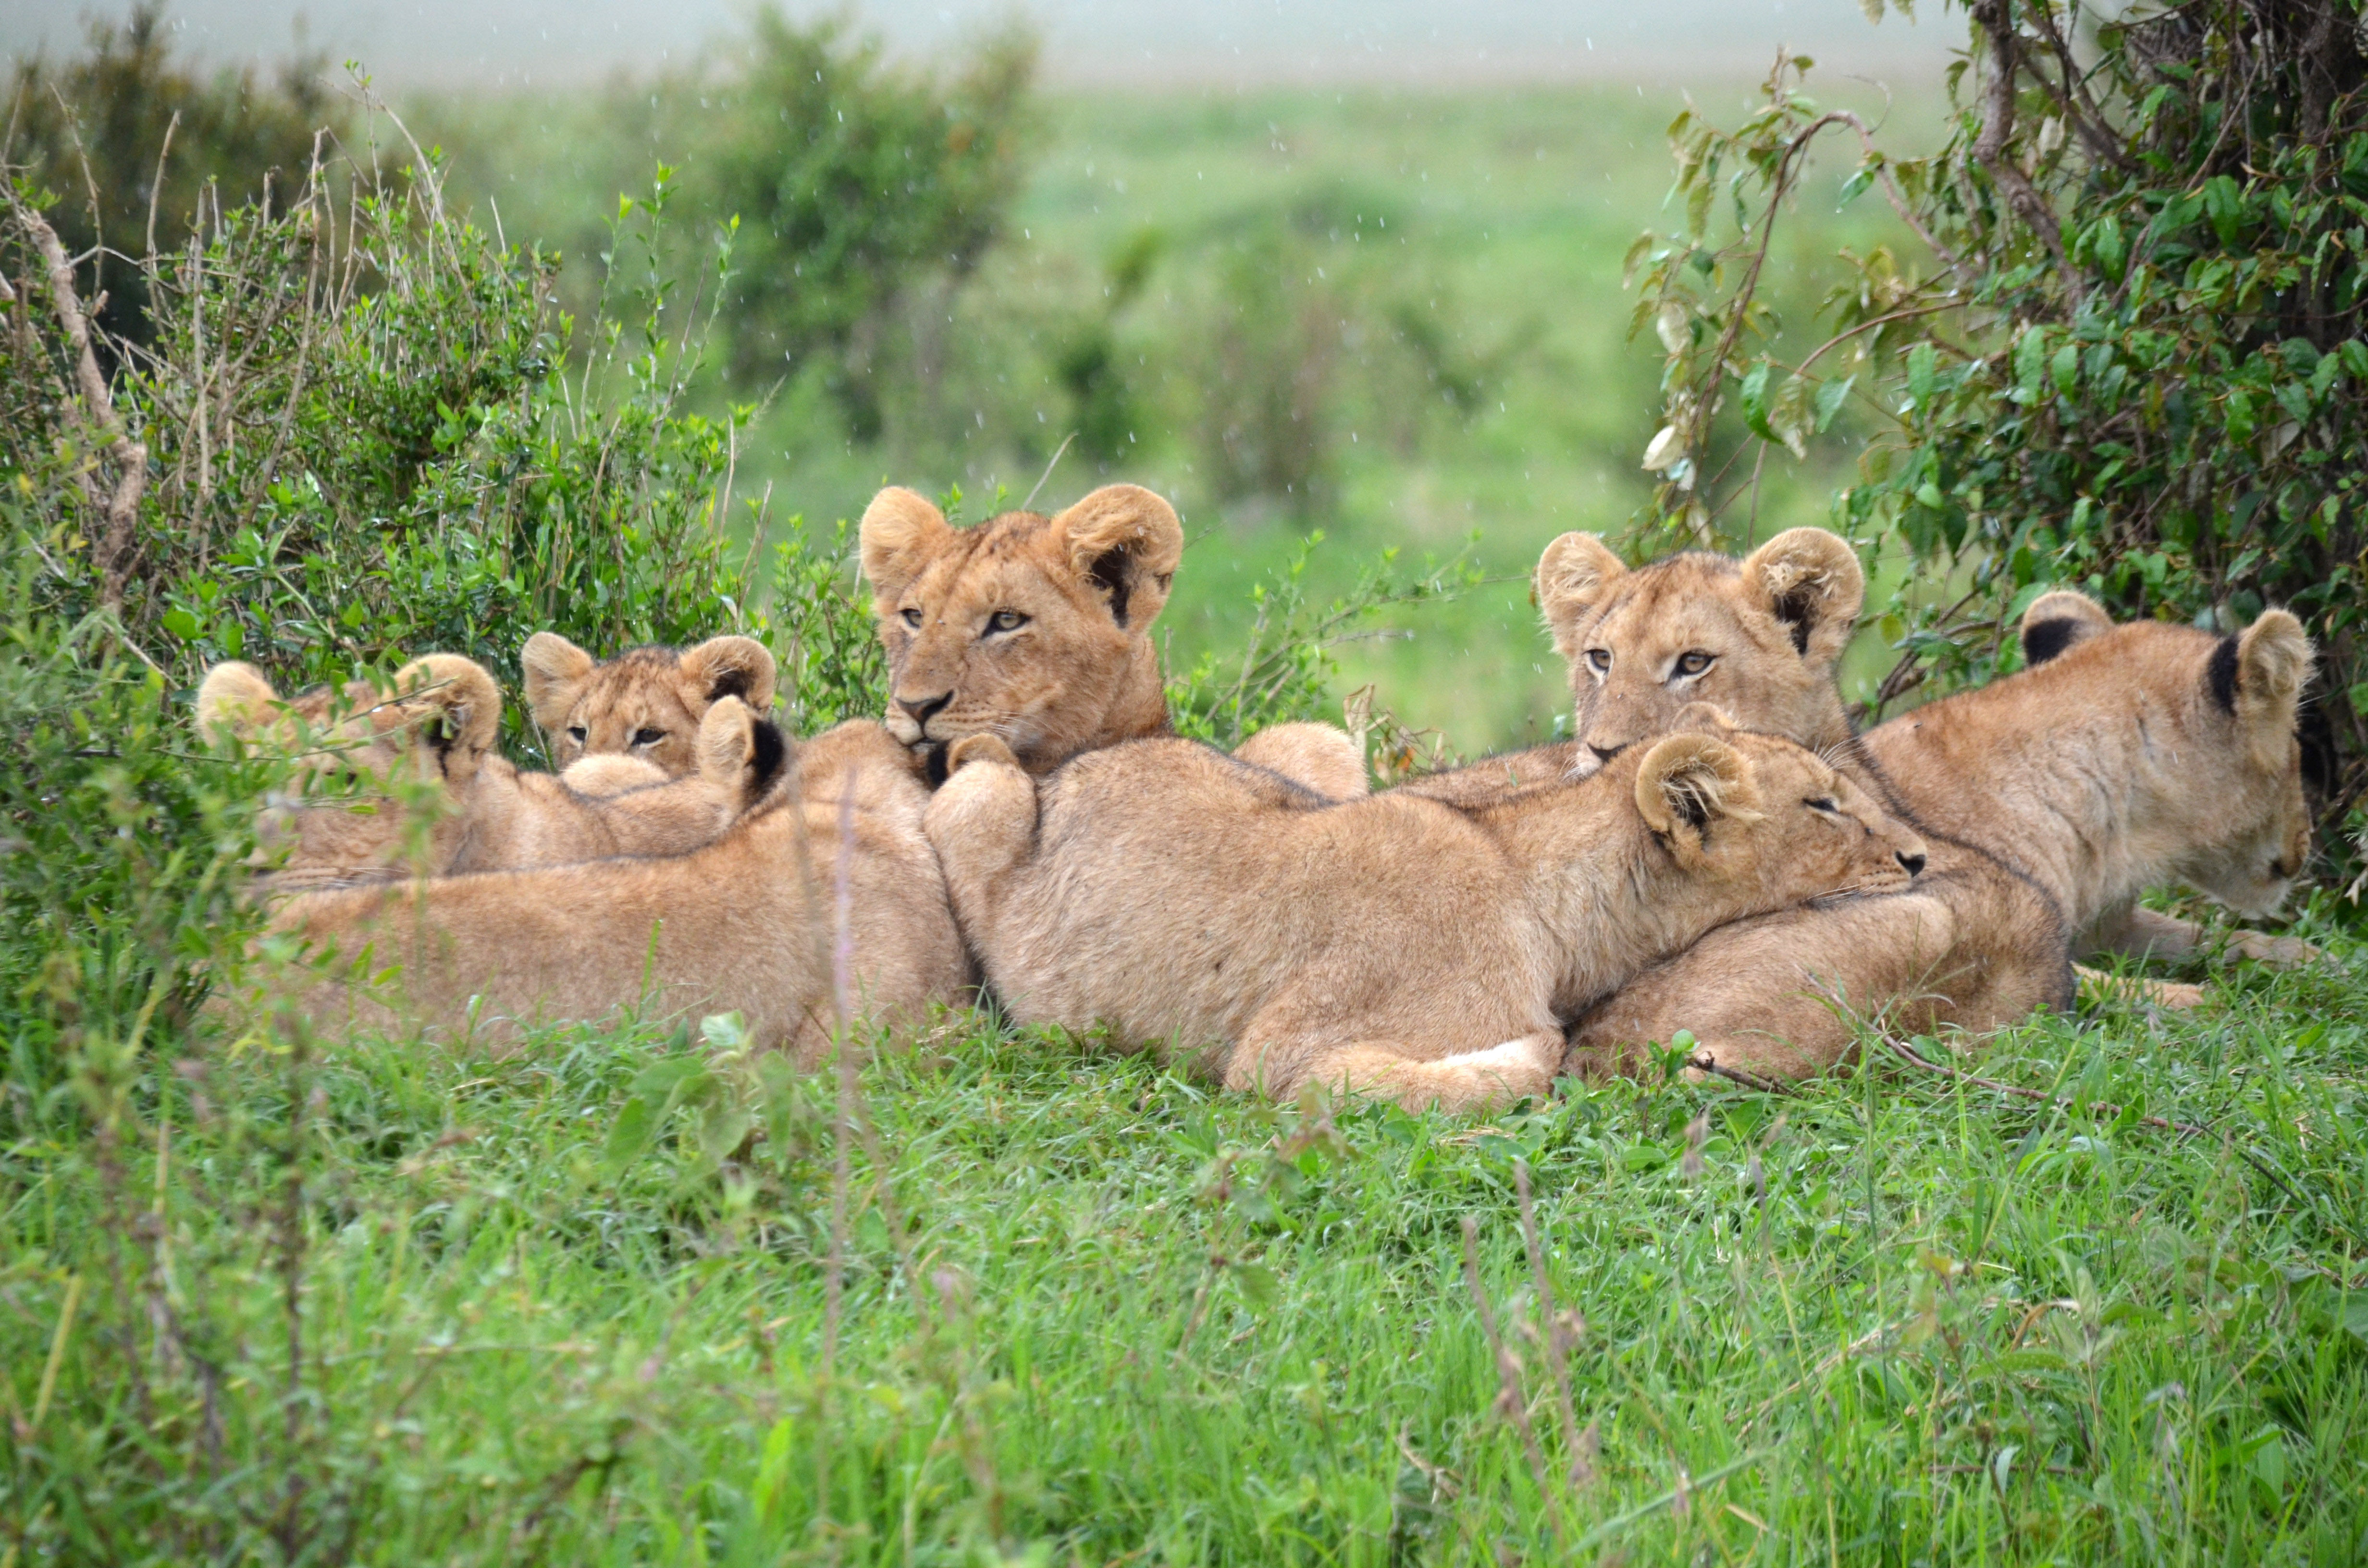 Pride of Lions in Kenya image - Free stock photo - Public Domain ...